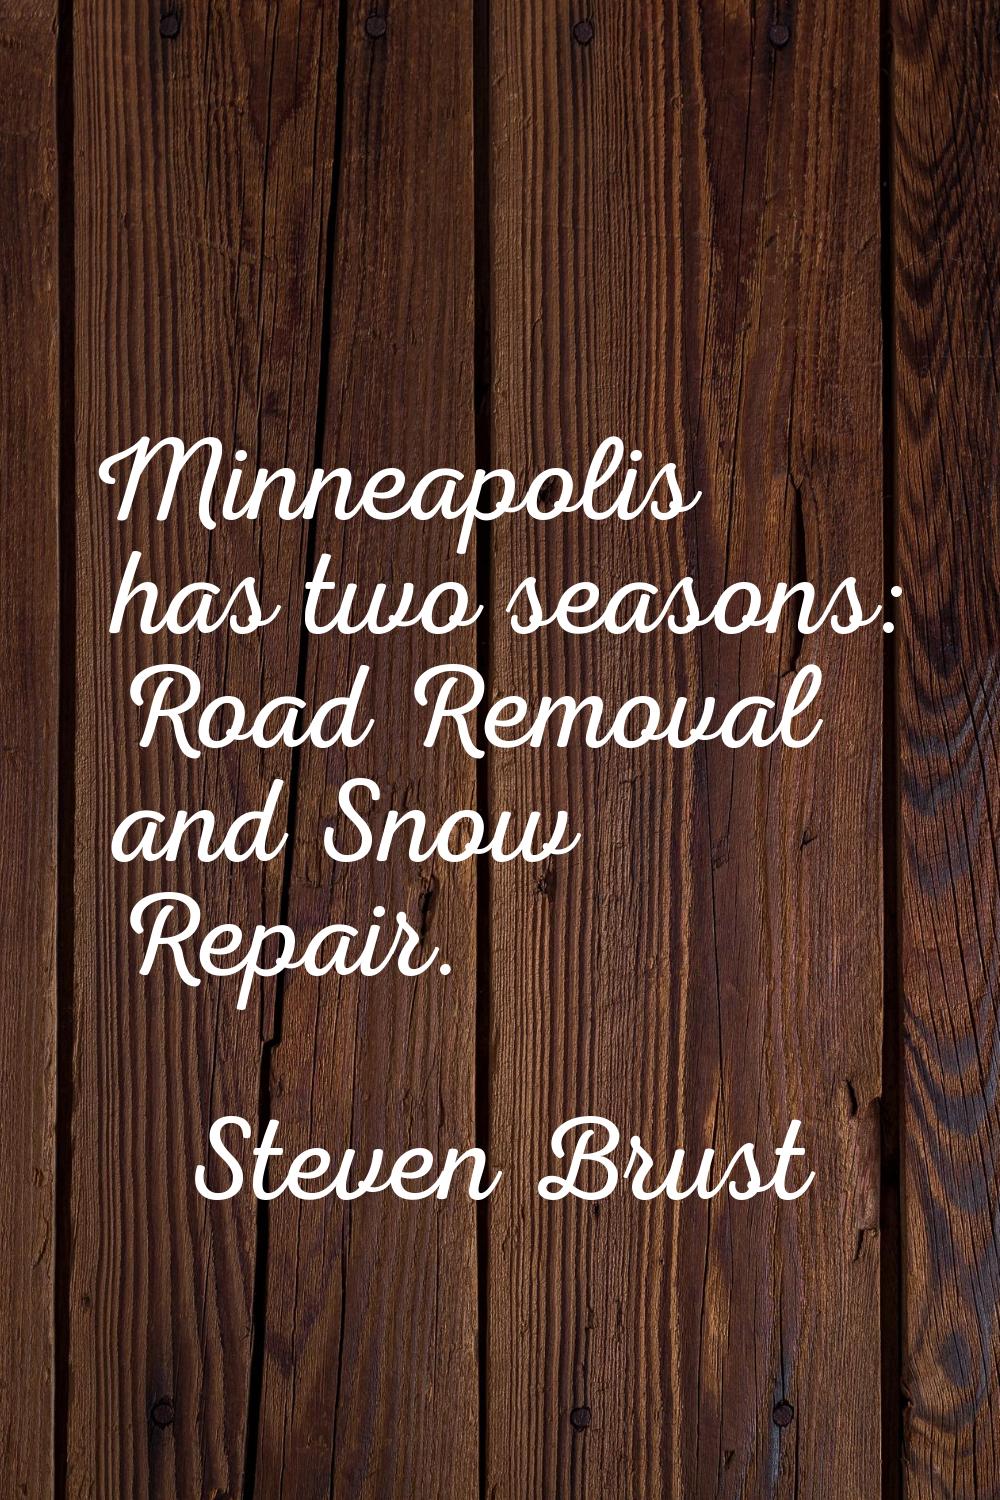 Minneapolis has two seasons: Road Removal and Snow Repair.